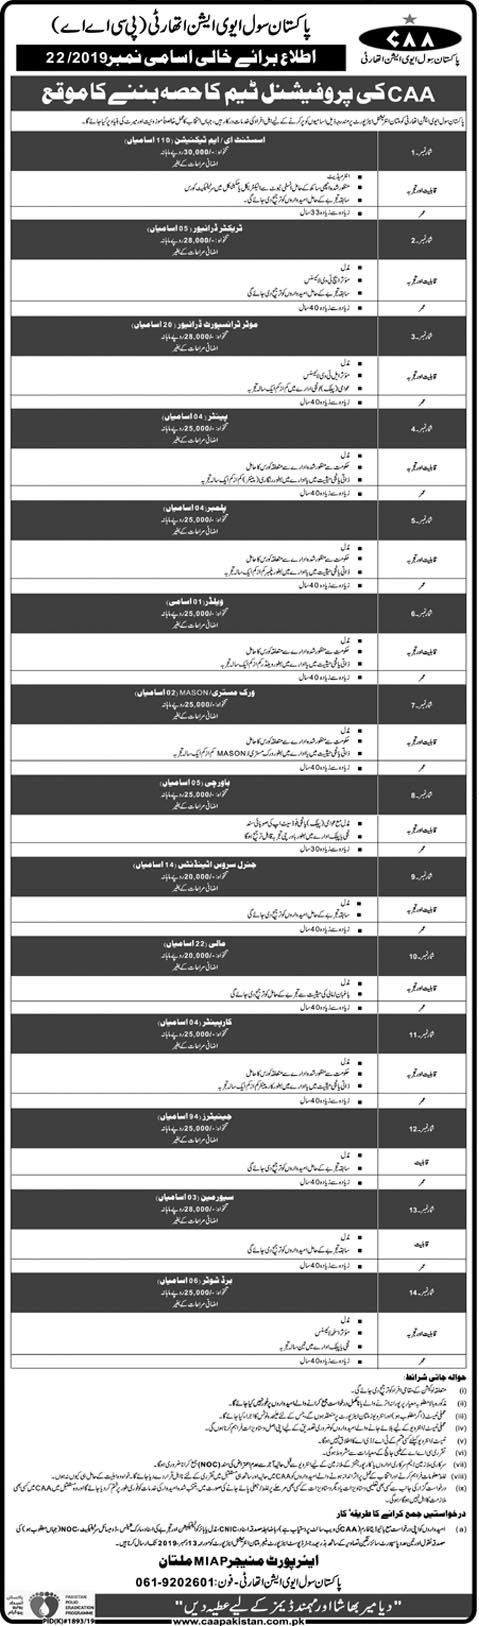 Jobs In Pakistan Civil Aviation Authority PCAA 30 November 2019